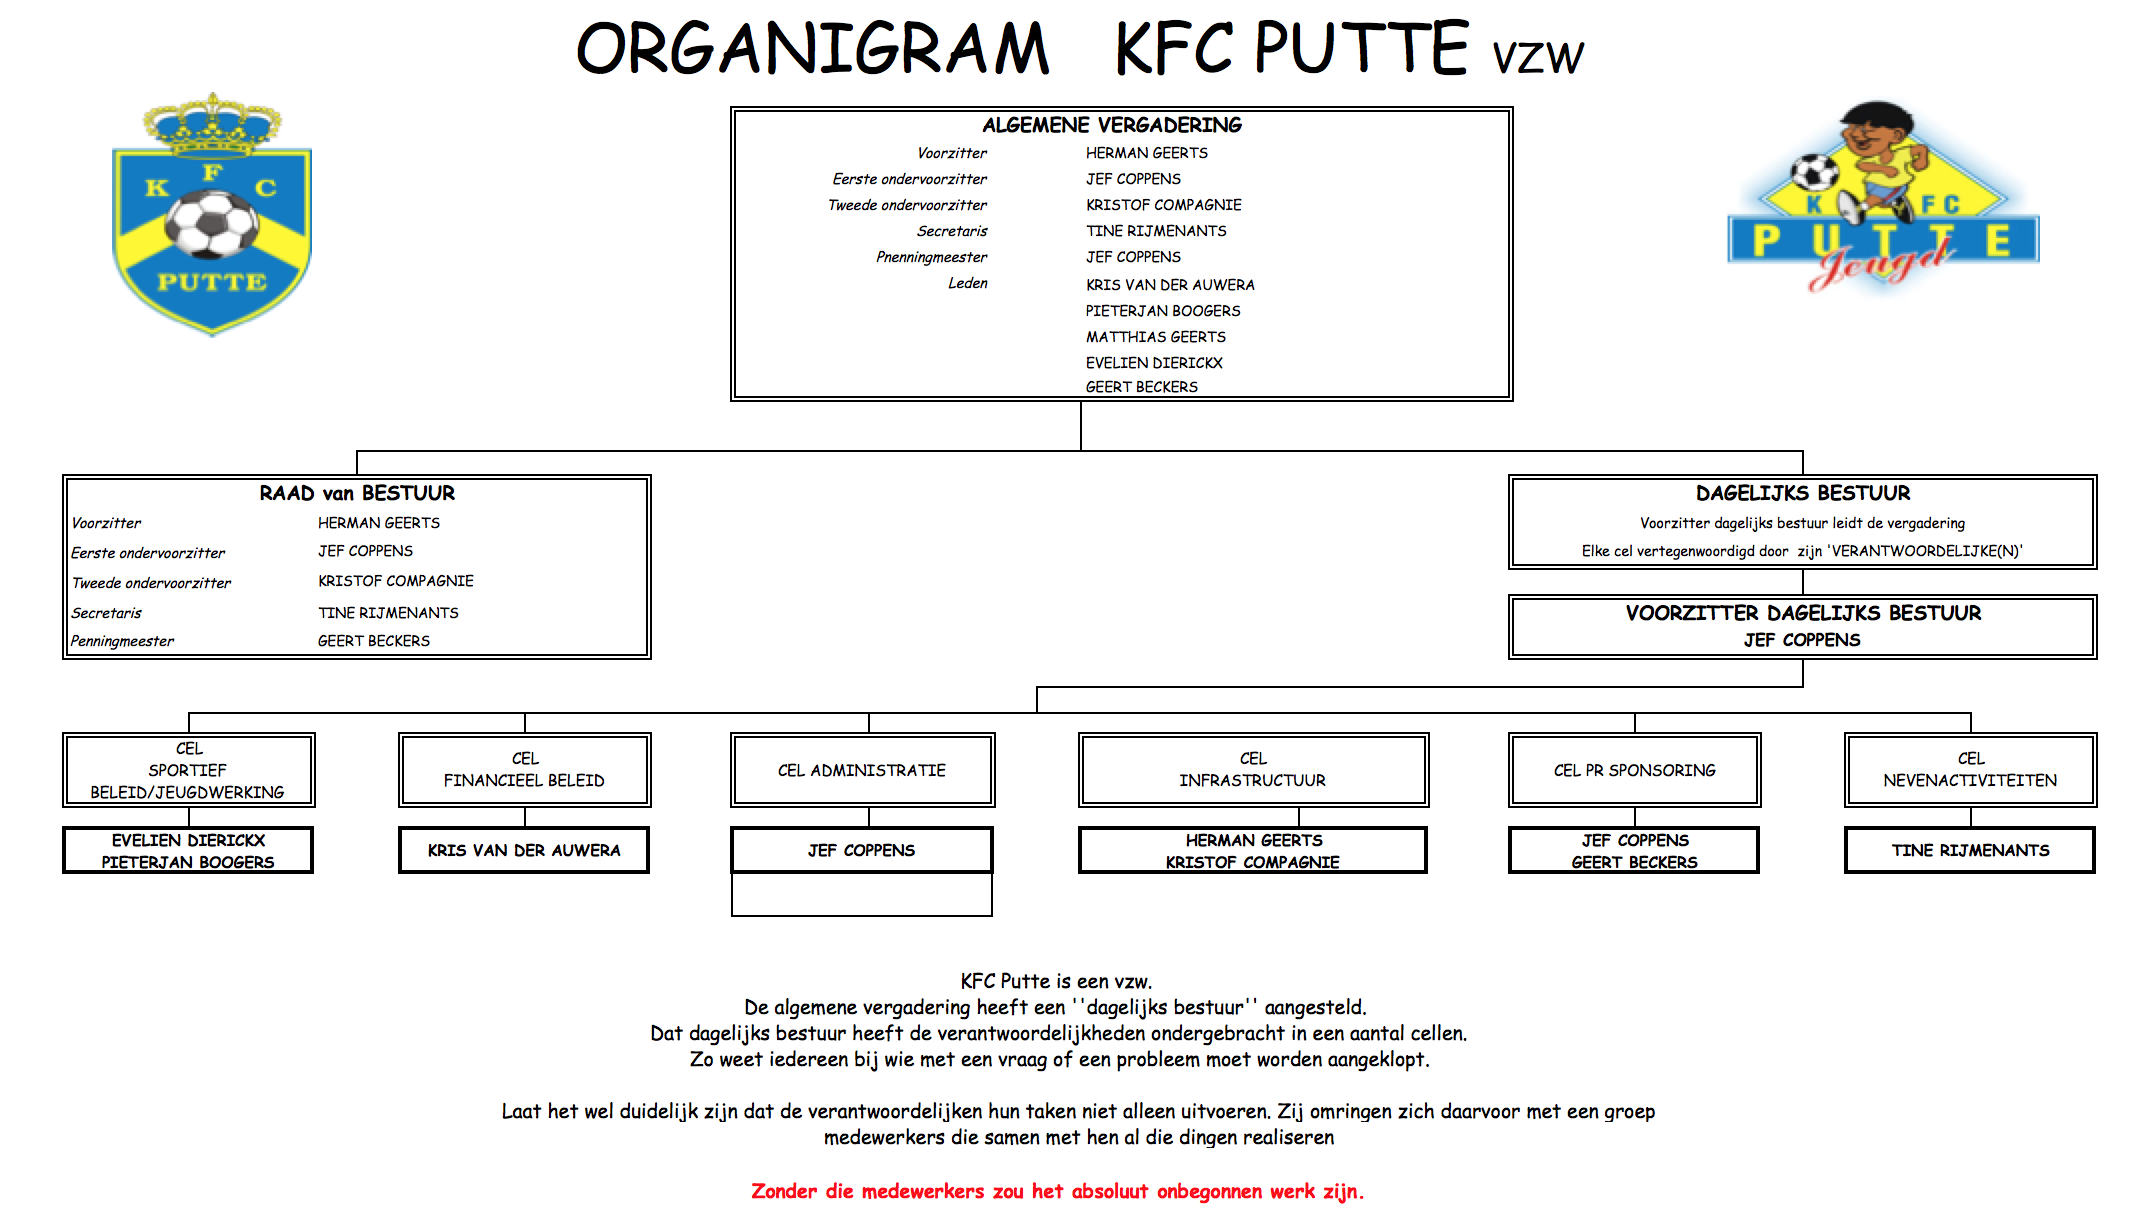 ORGANIGRAM KFC PUTTE 2019-2020